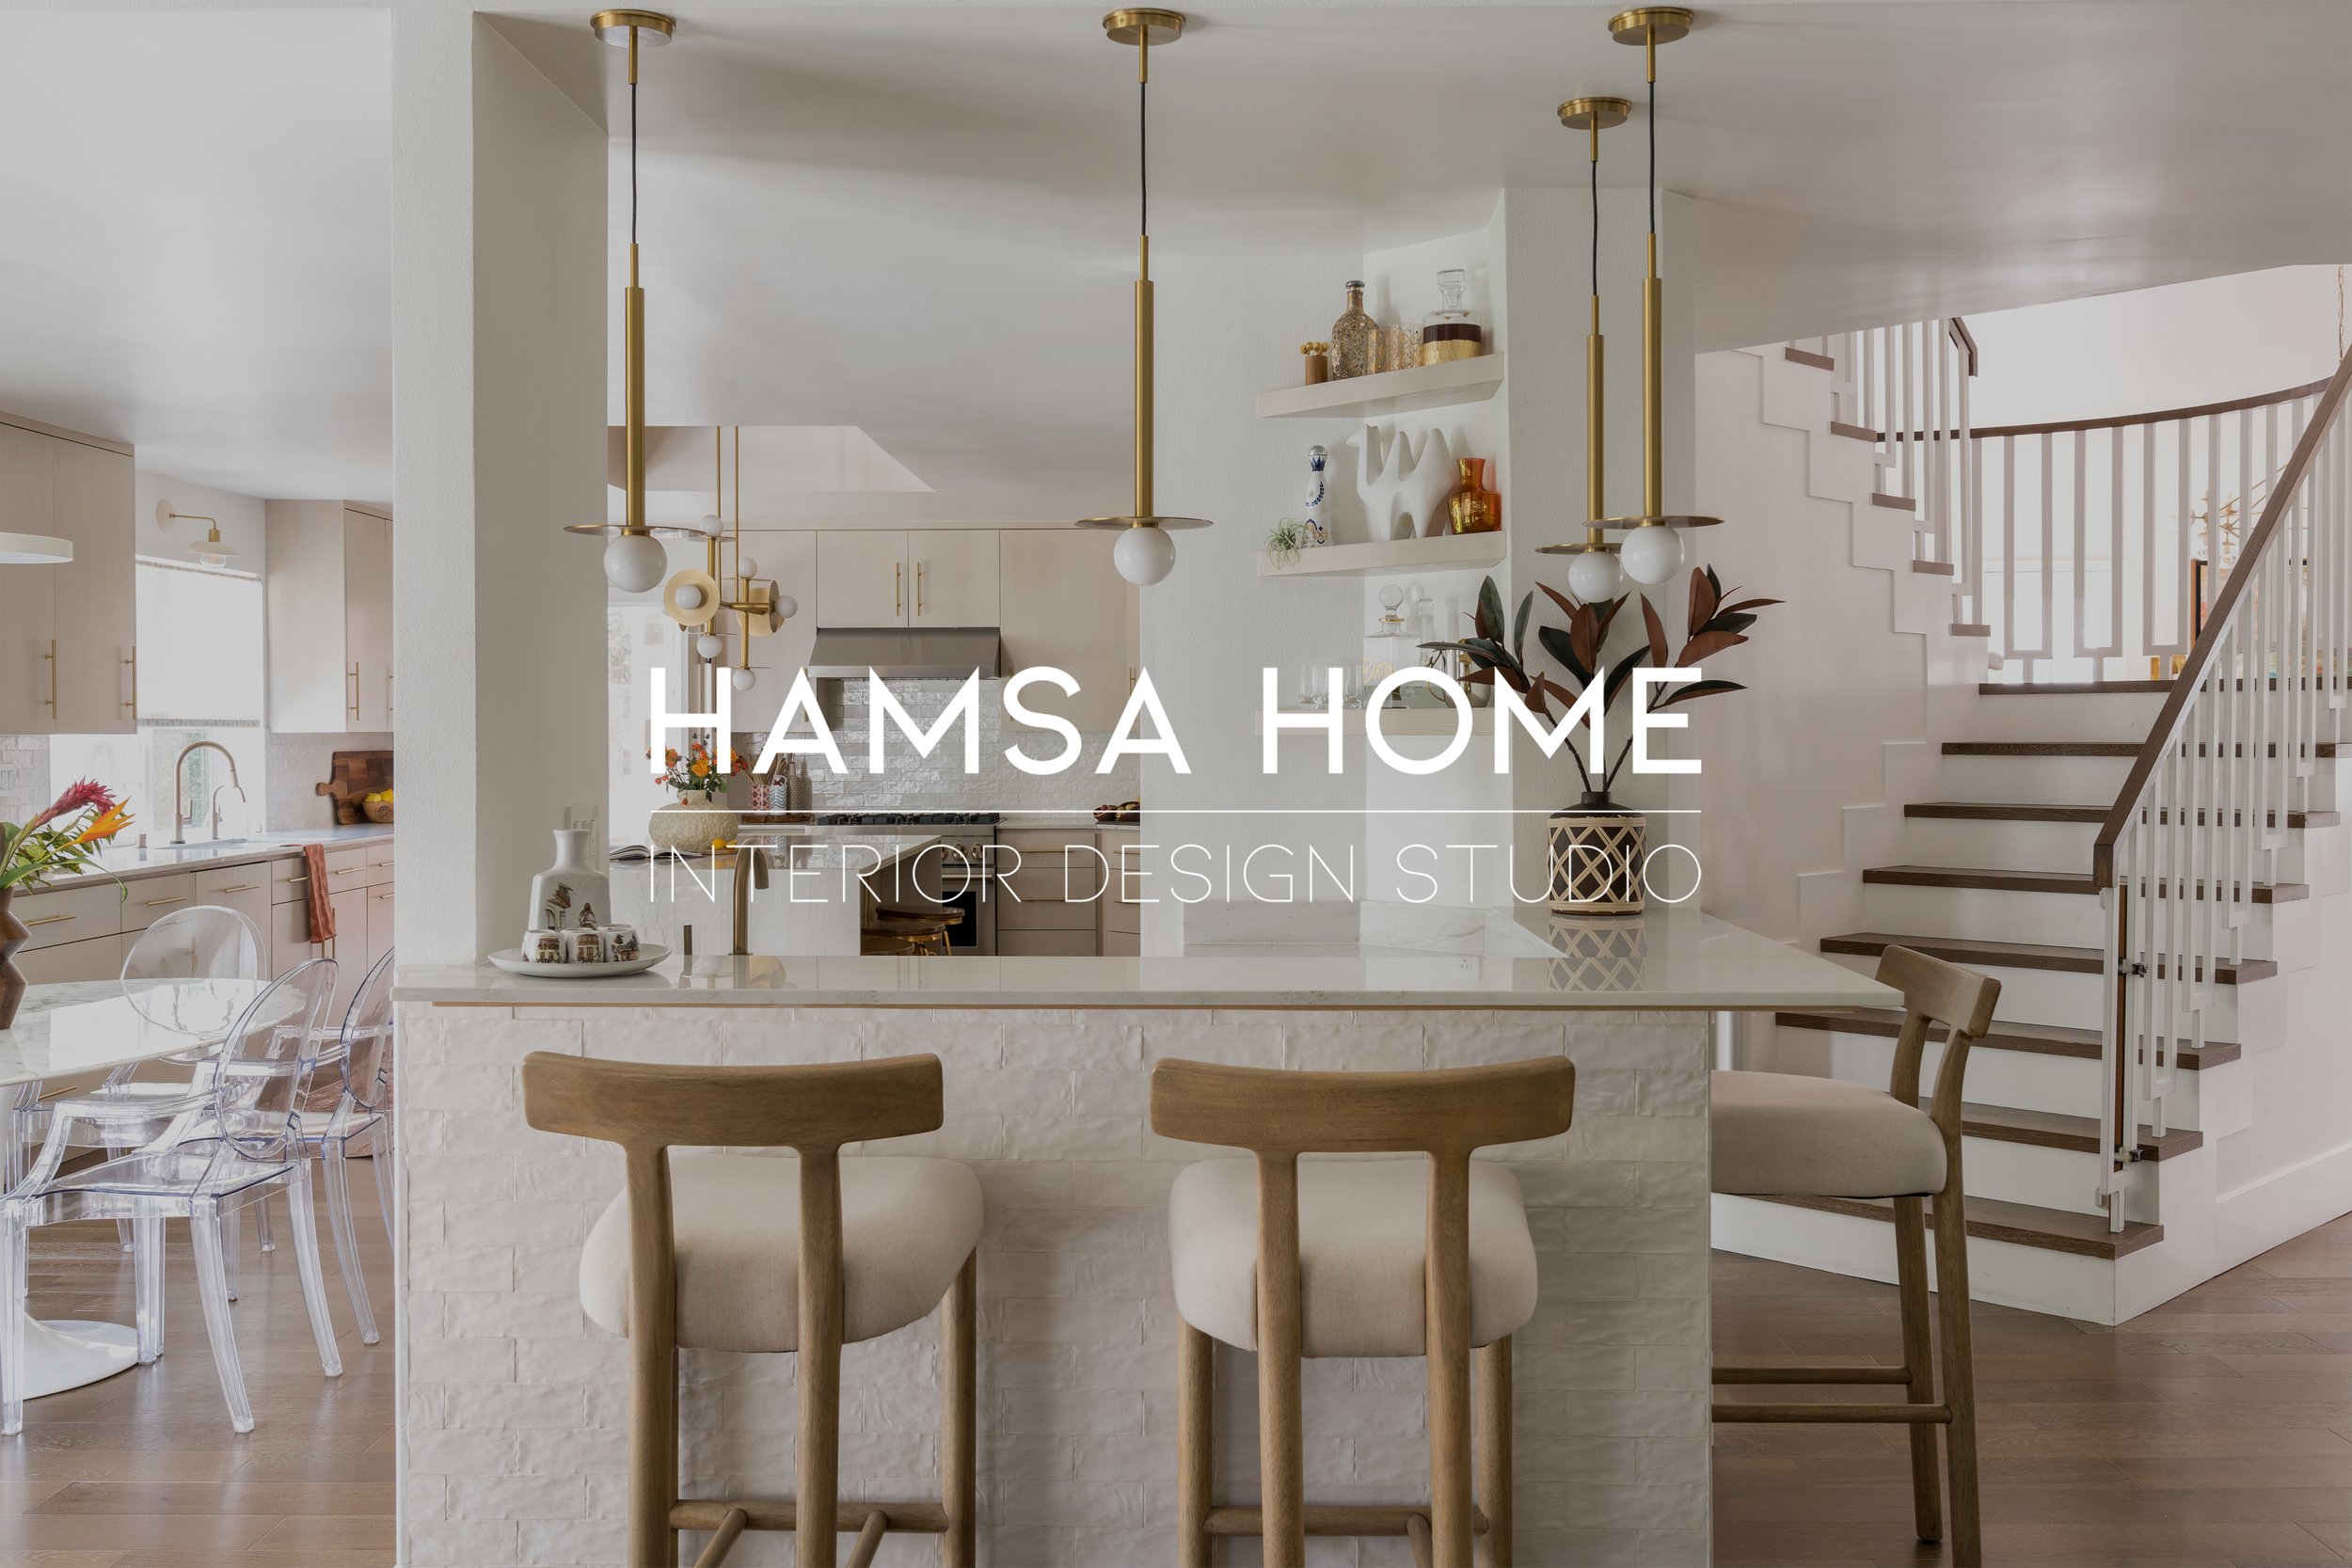 Share 63+ hamsa home interior design super hot